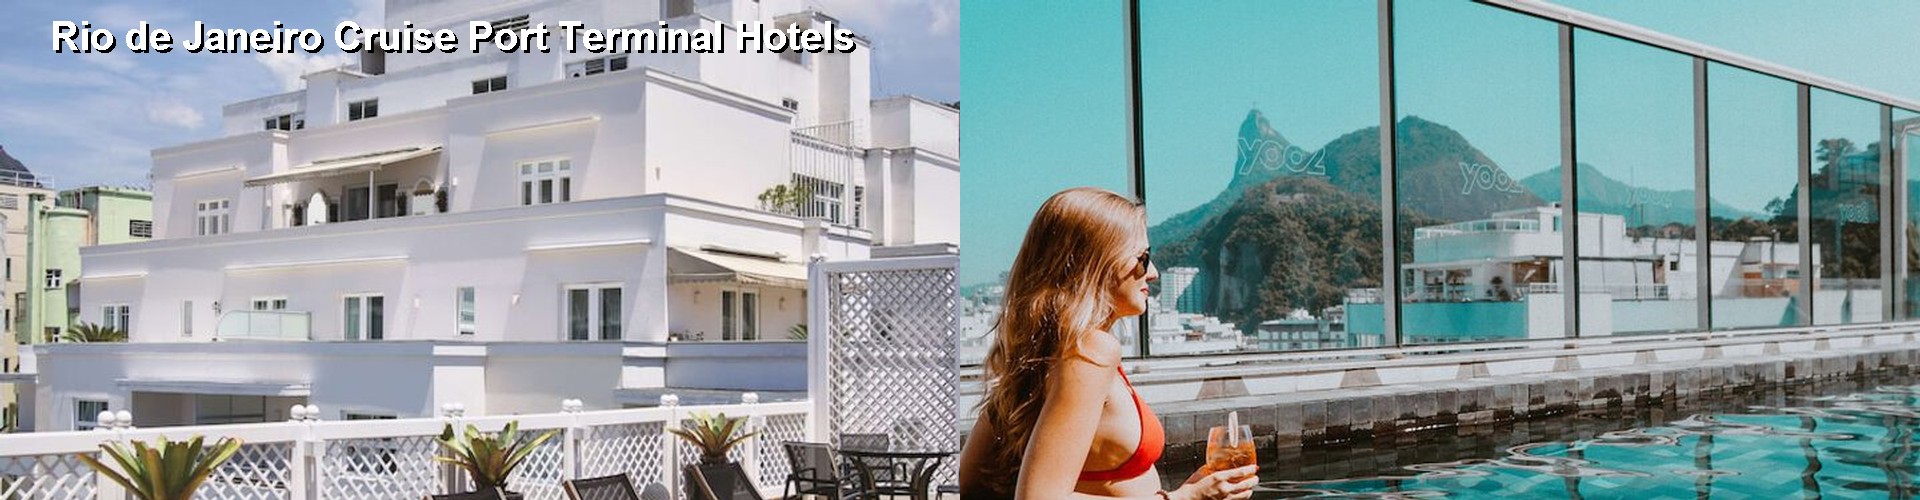 5 Best Hotels near Rio de Janeiro Cruise Port Terminal